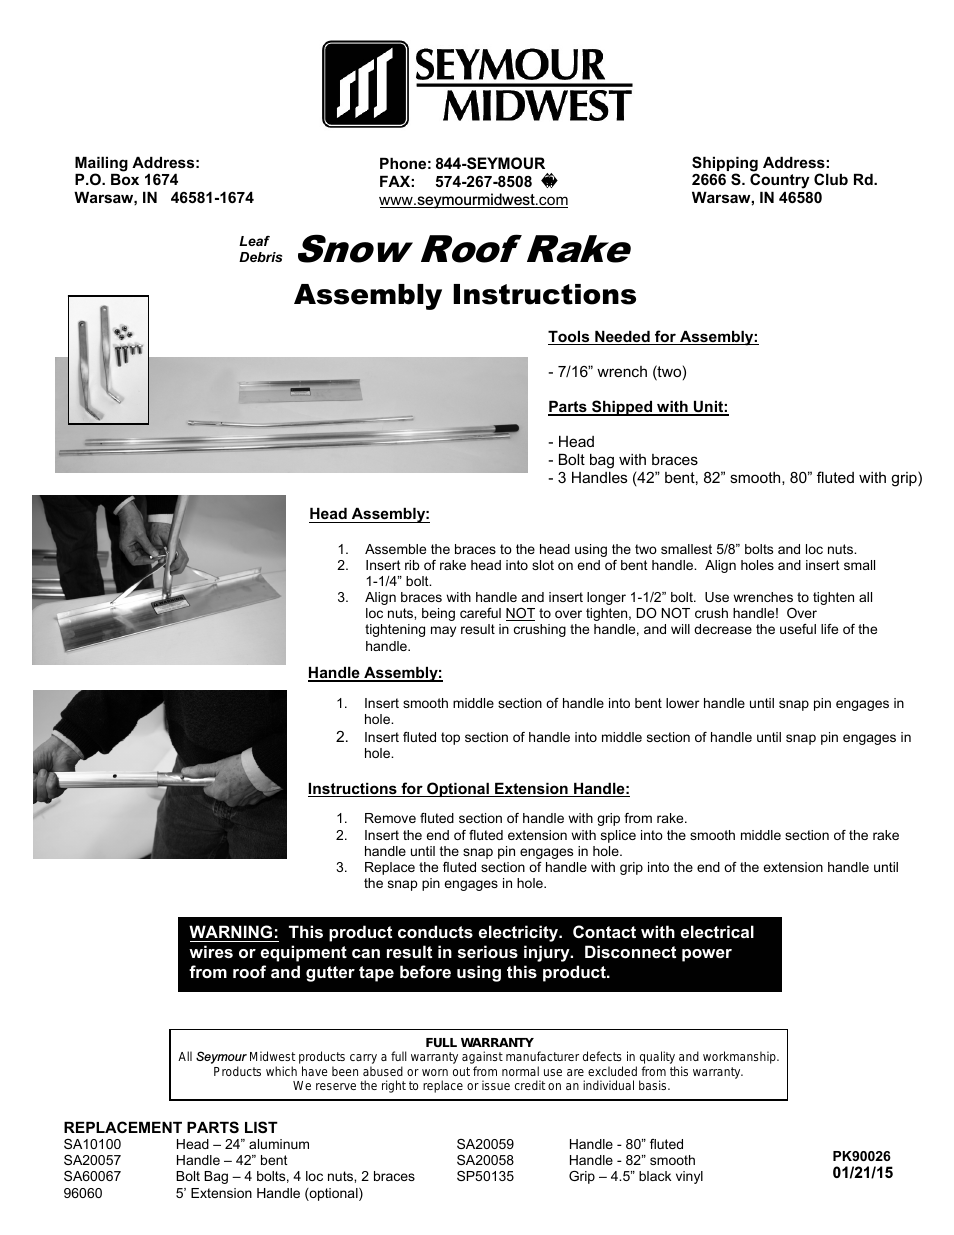 Snow Roof Rake, 3 Handles(PK90026)